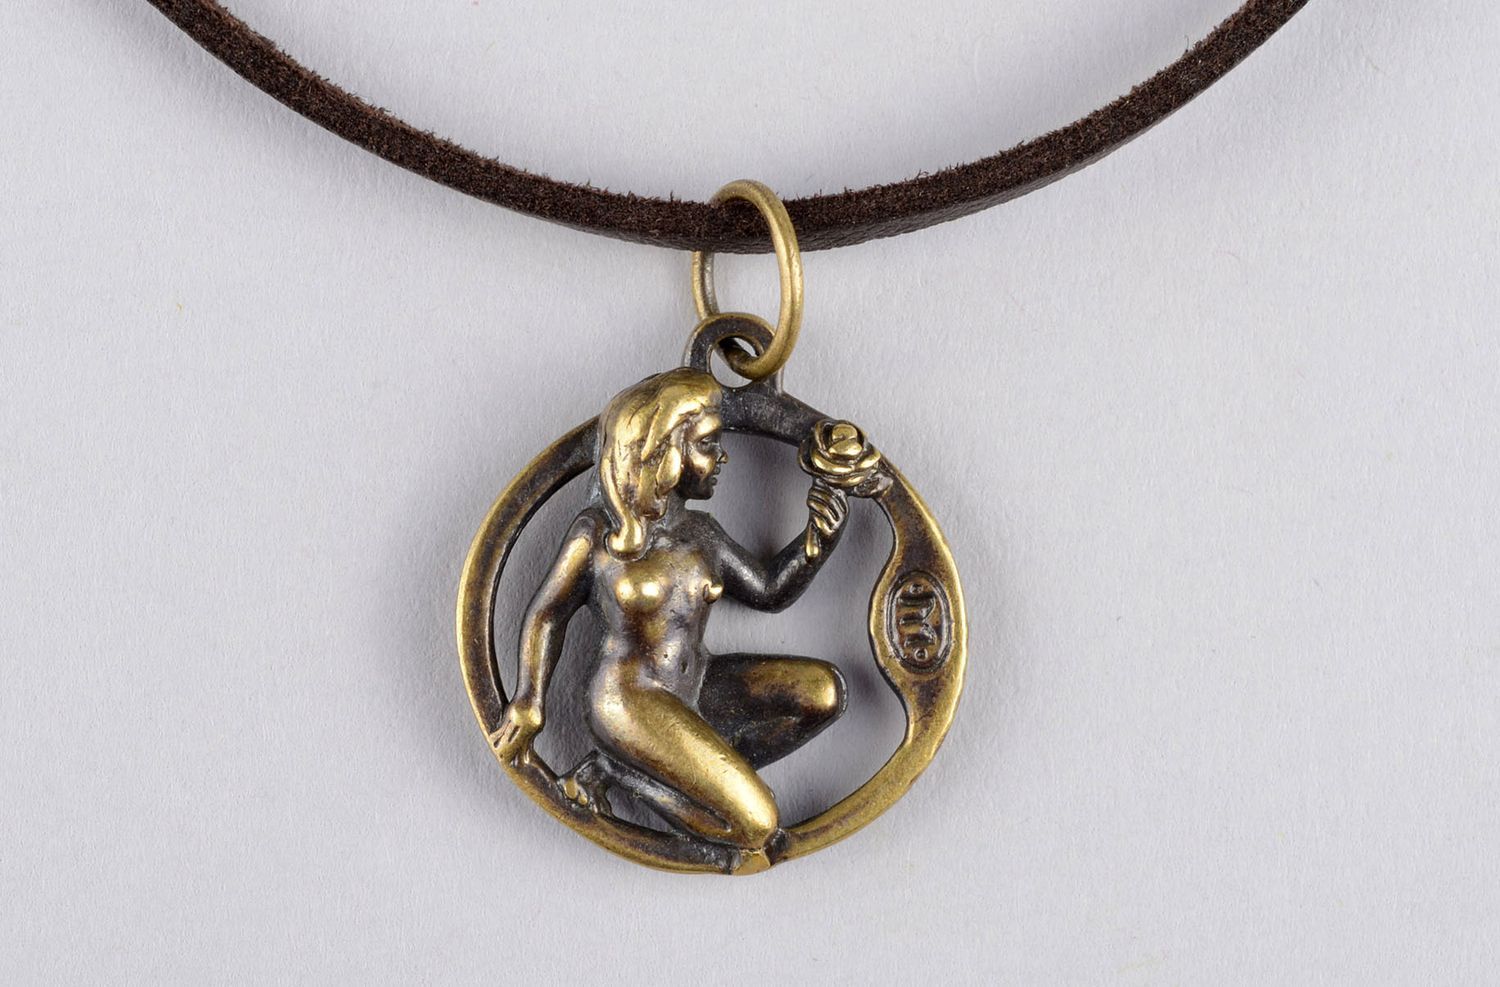 Handmade jewelry pendant necklace bronze jewelry fashion accessories gift ideas photo 5